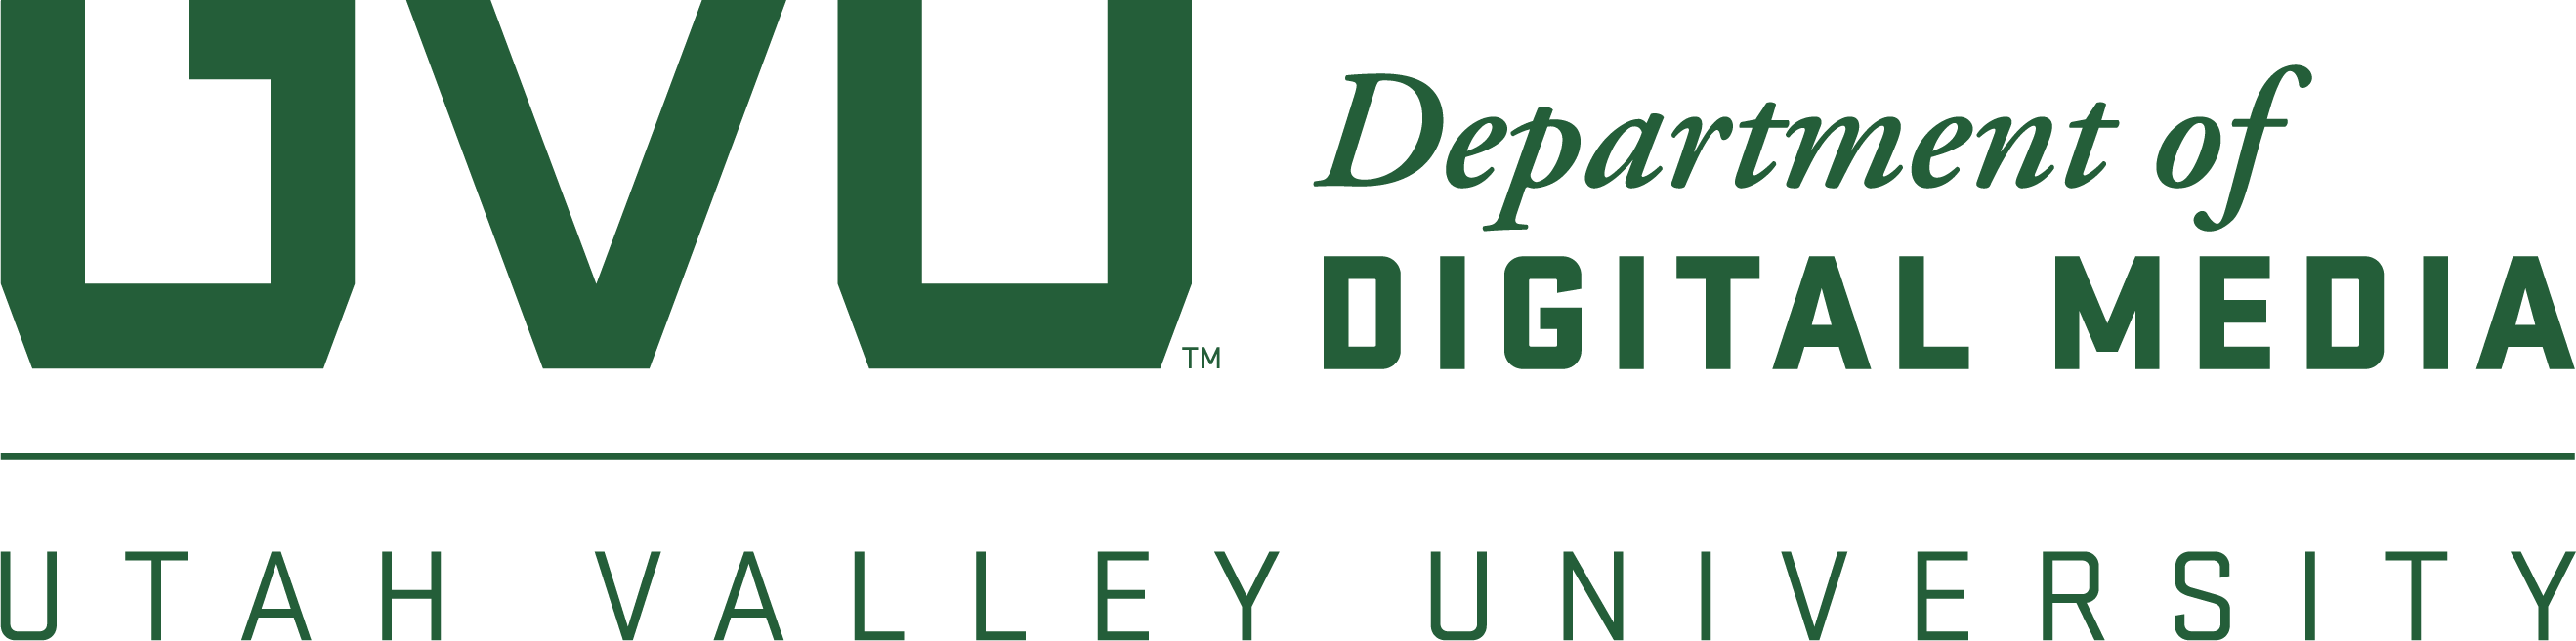 Utah Valley University, Digital Media Department